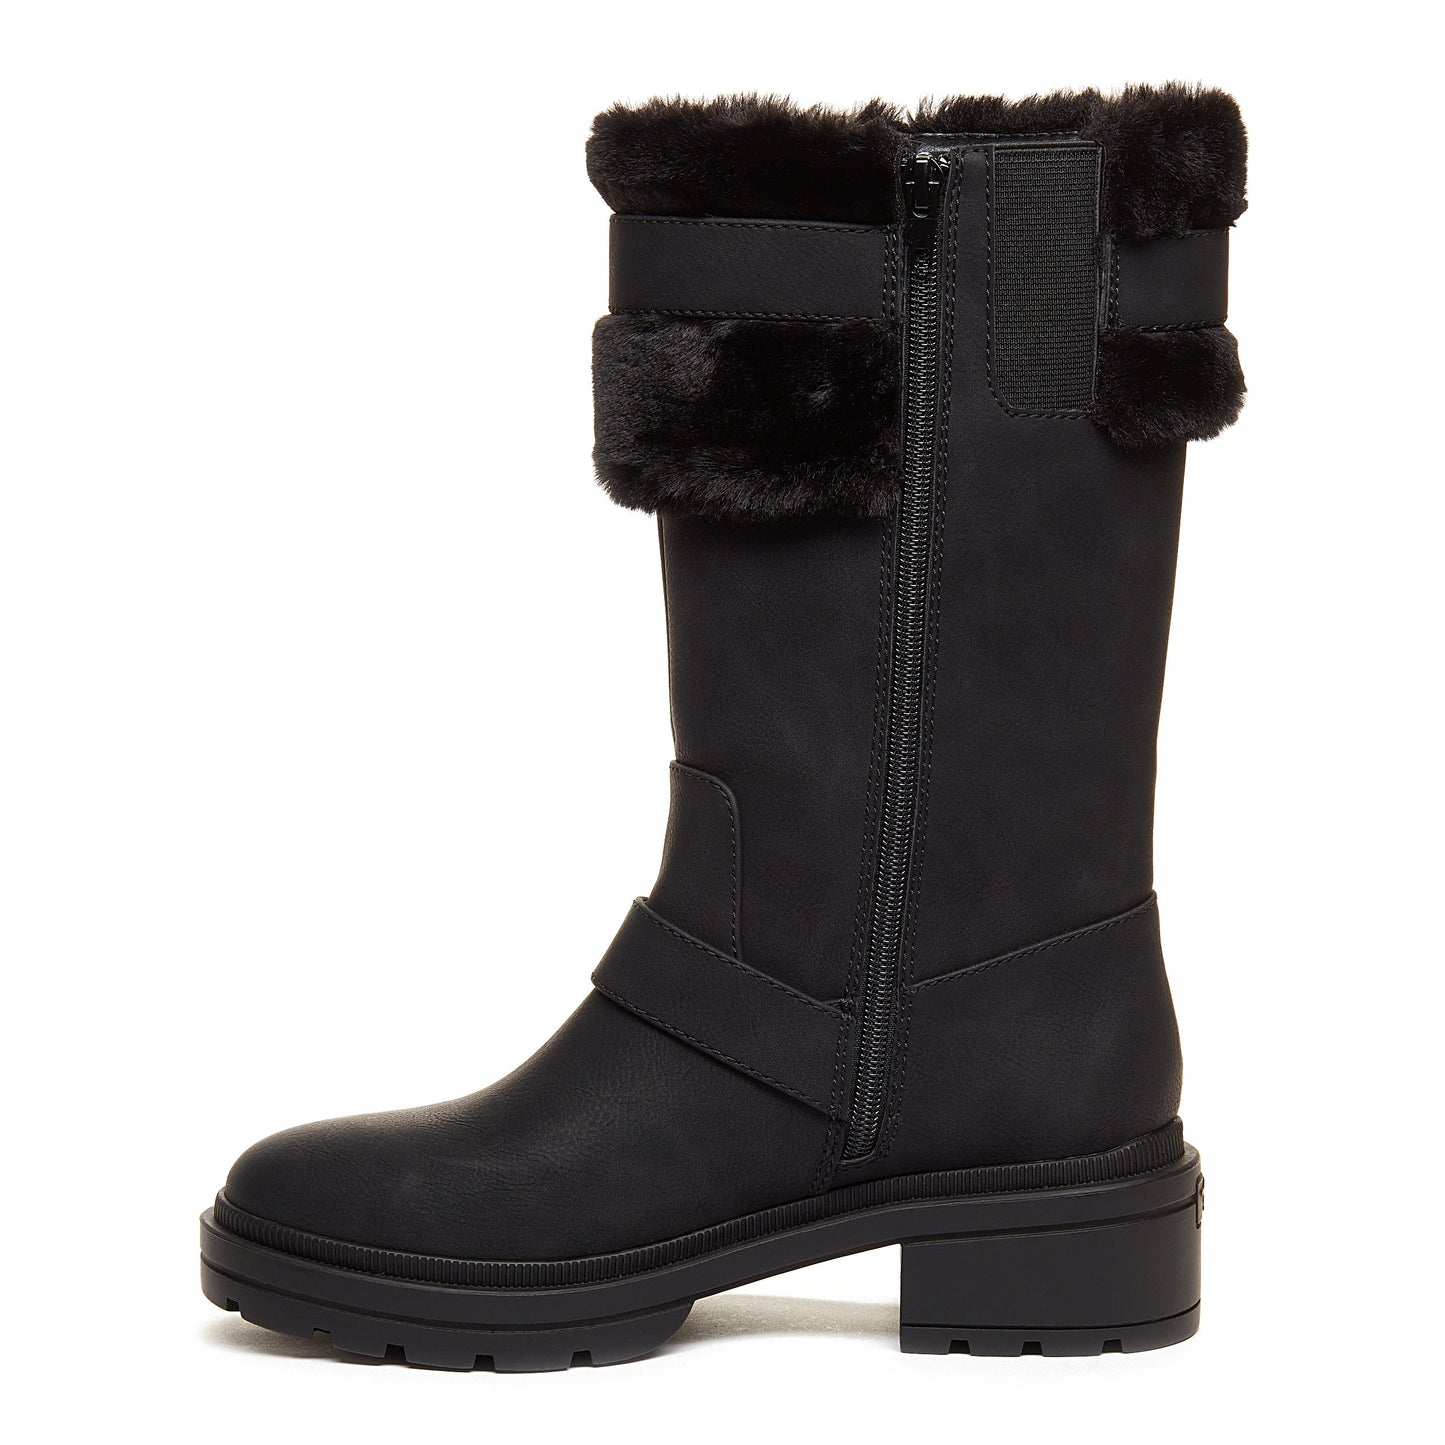 Igloo Black Buckled Tall Winter Boot